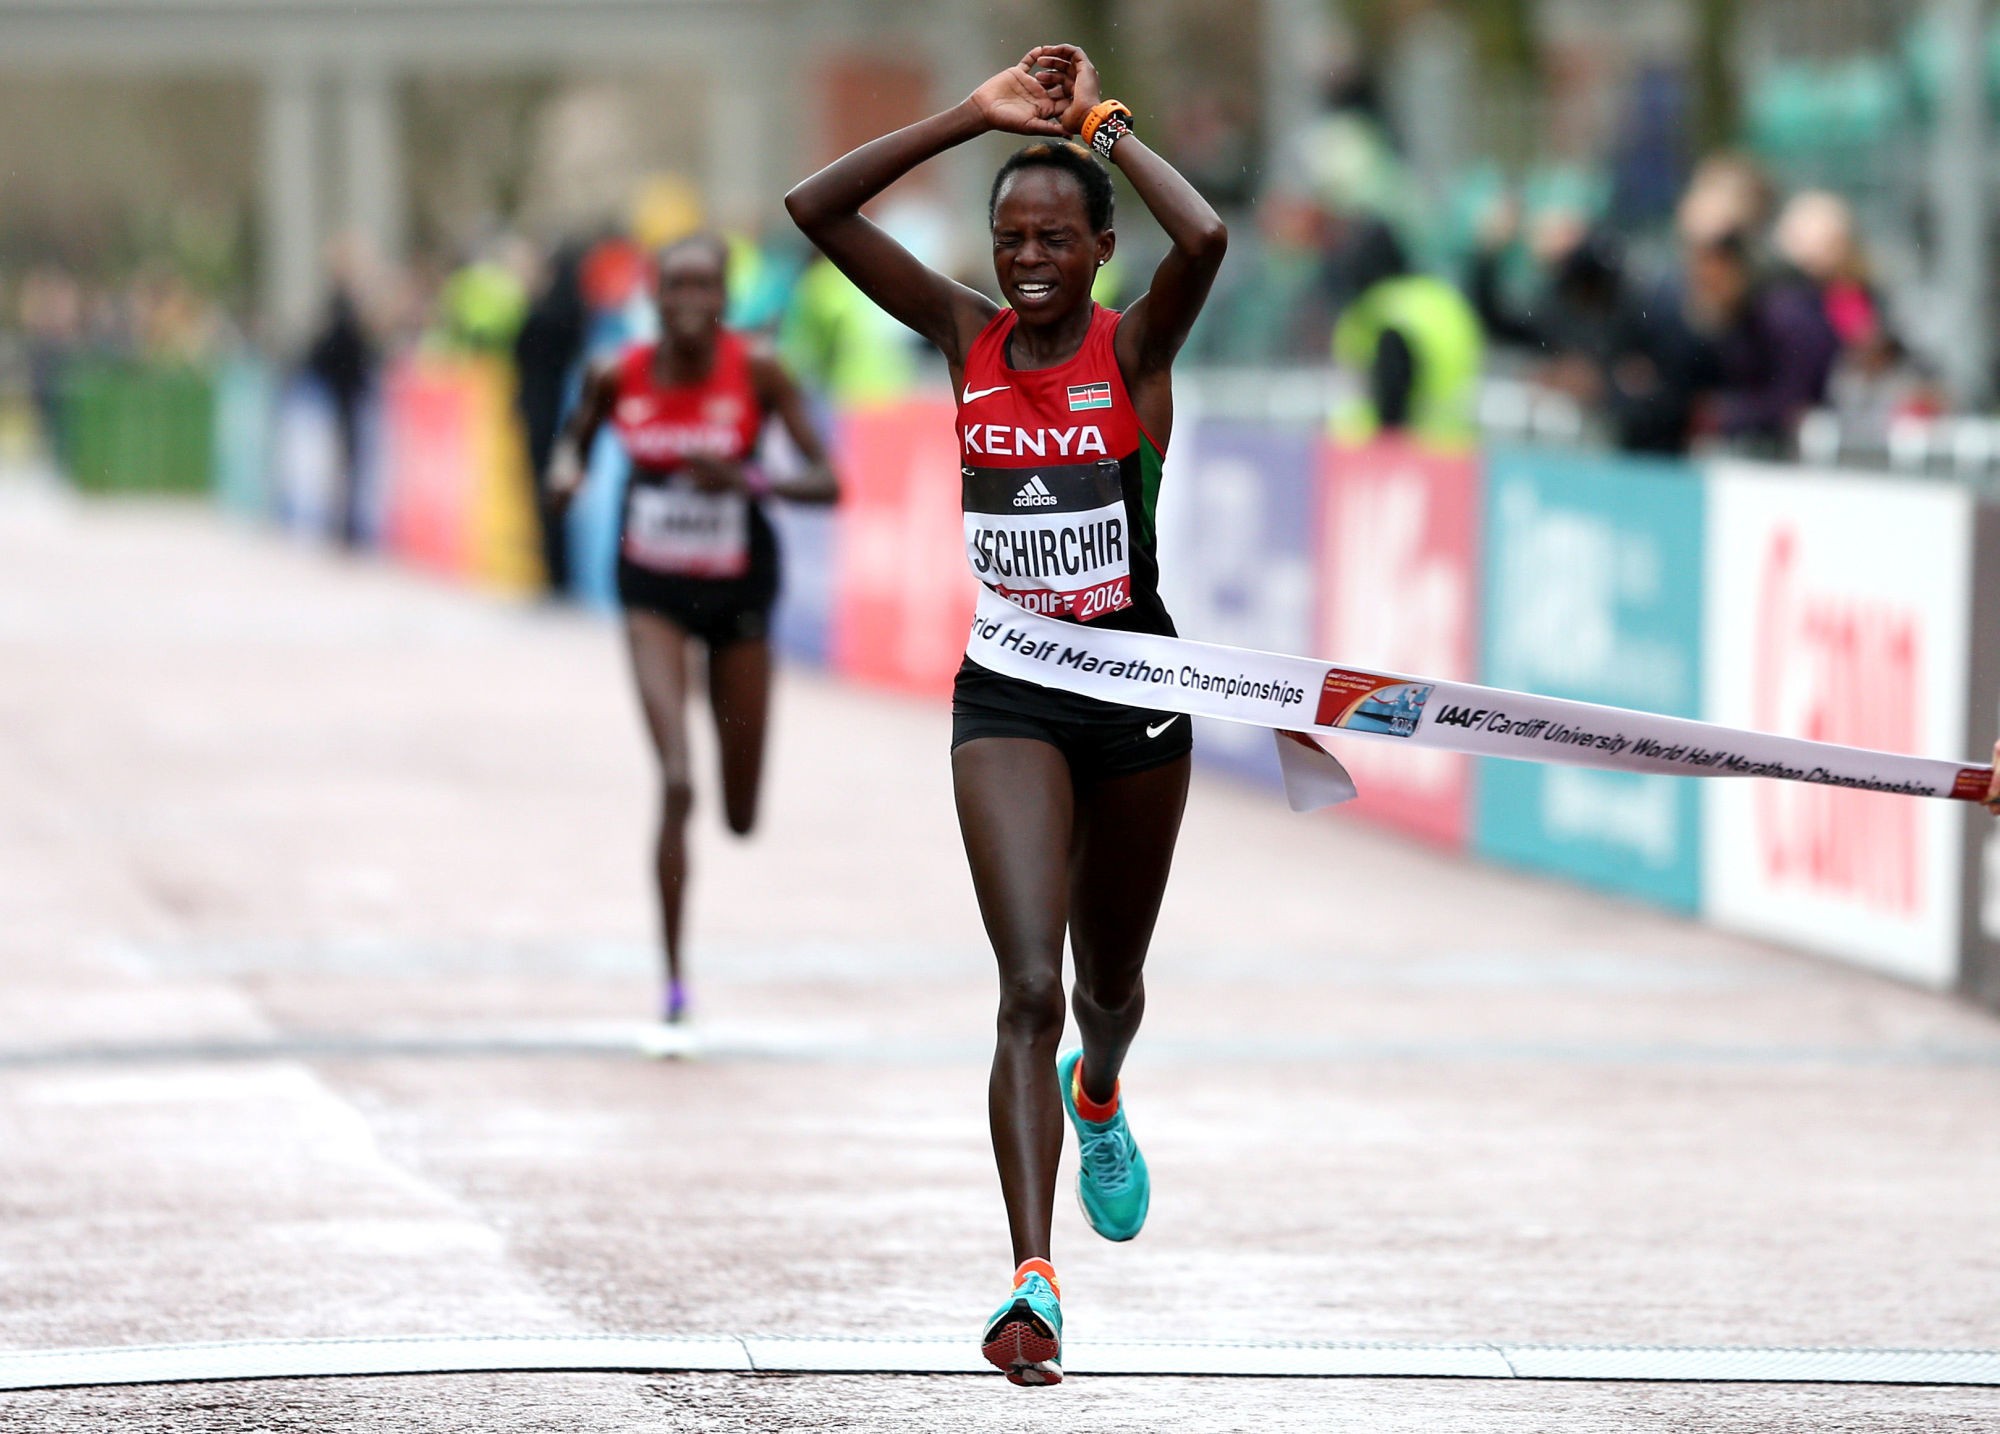 Kenya's Peres Jepchirchir wins the Women's Elite 2016 IAAF World Half Marathon Championships in Cardiff on March 26th 2016